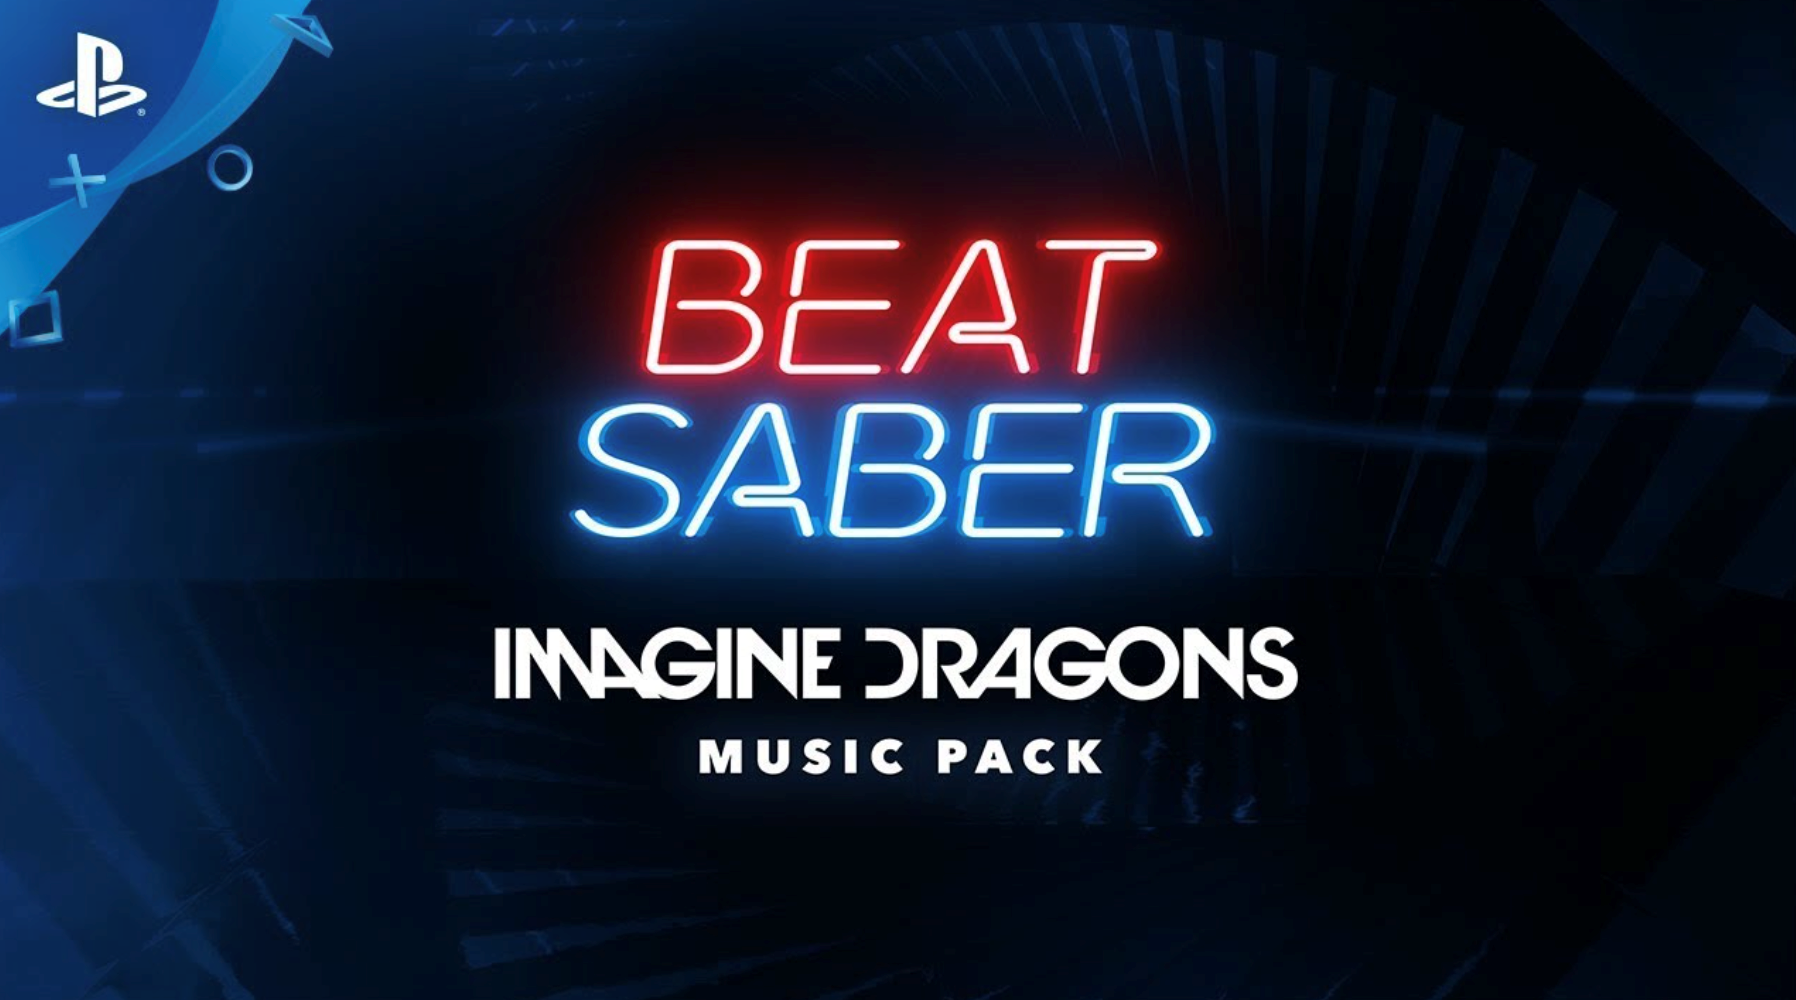 Beat saber + imagine Dragons Music Pack ps4. Beat the Dragon. Beat saber imagine Dragons Expert Plus. Beats saber ps4